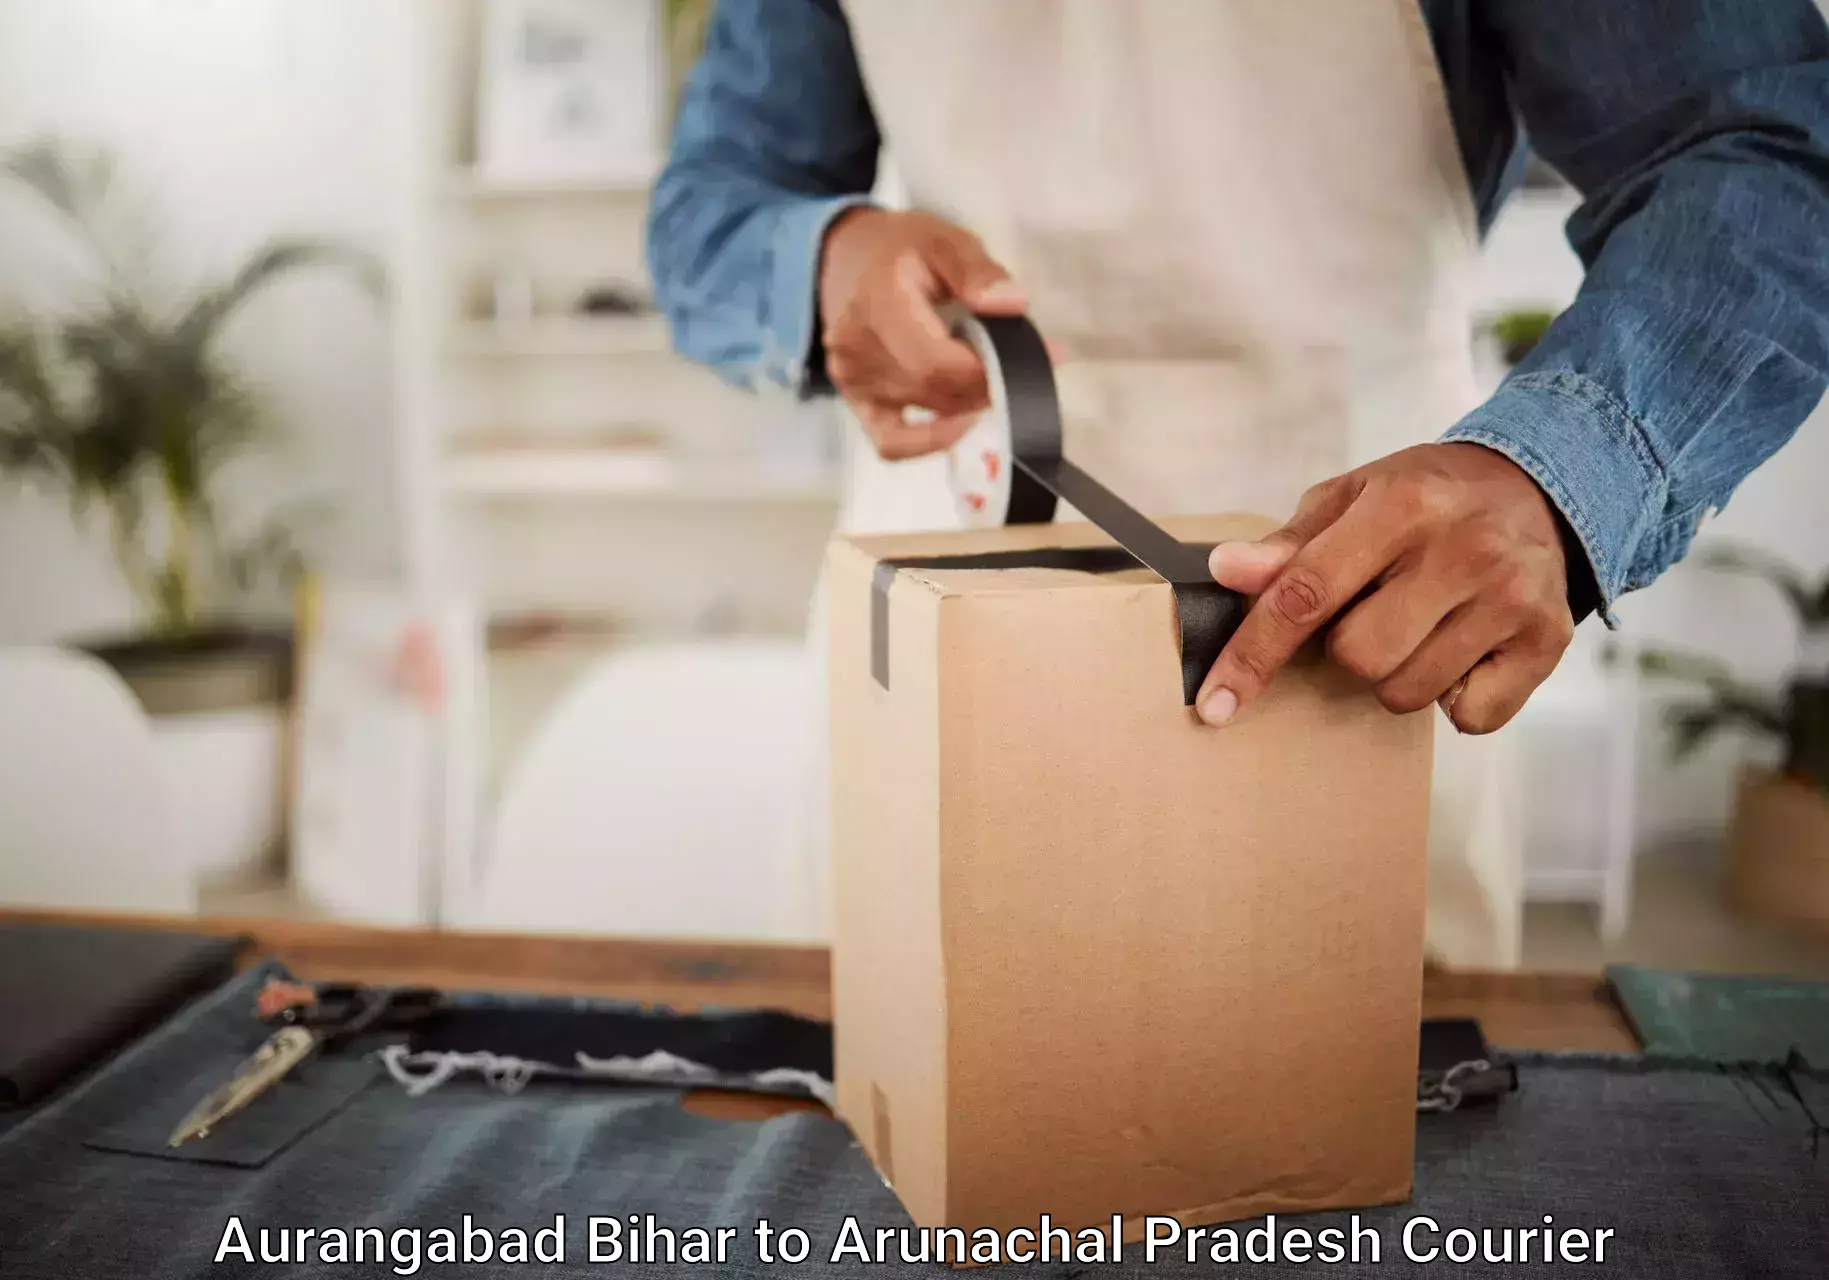 Baggage relocation service Aurangabad Bihar to Pasighat